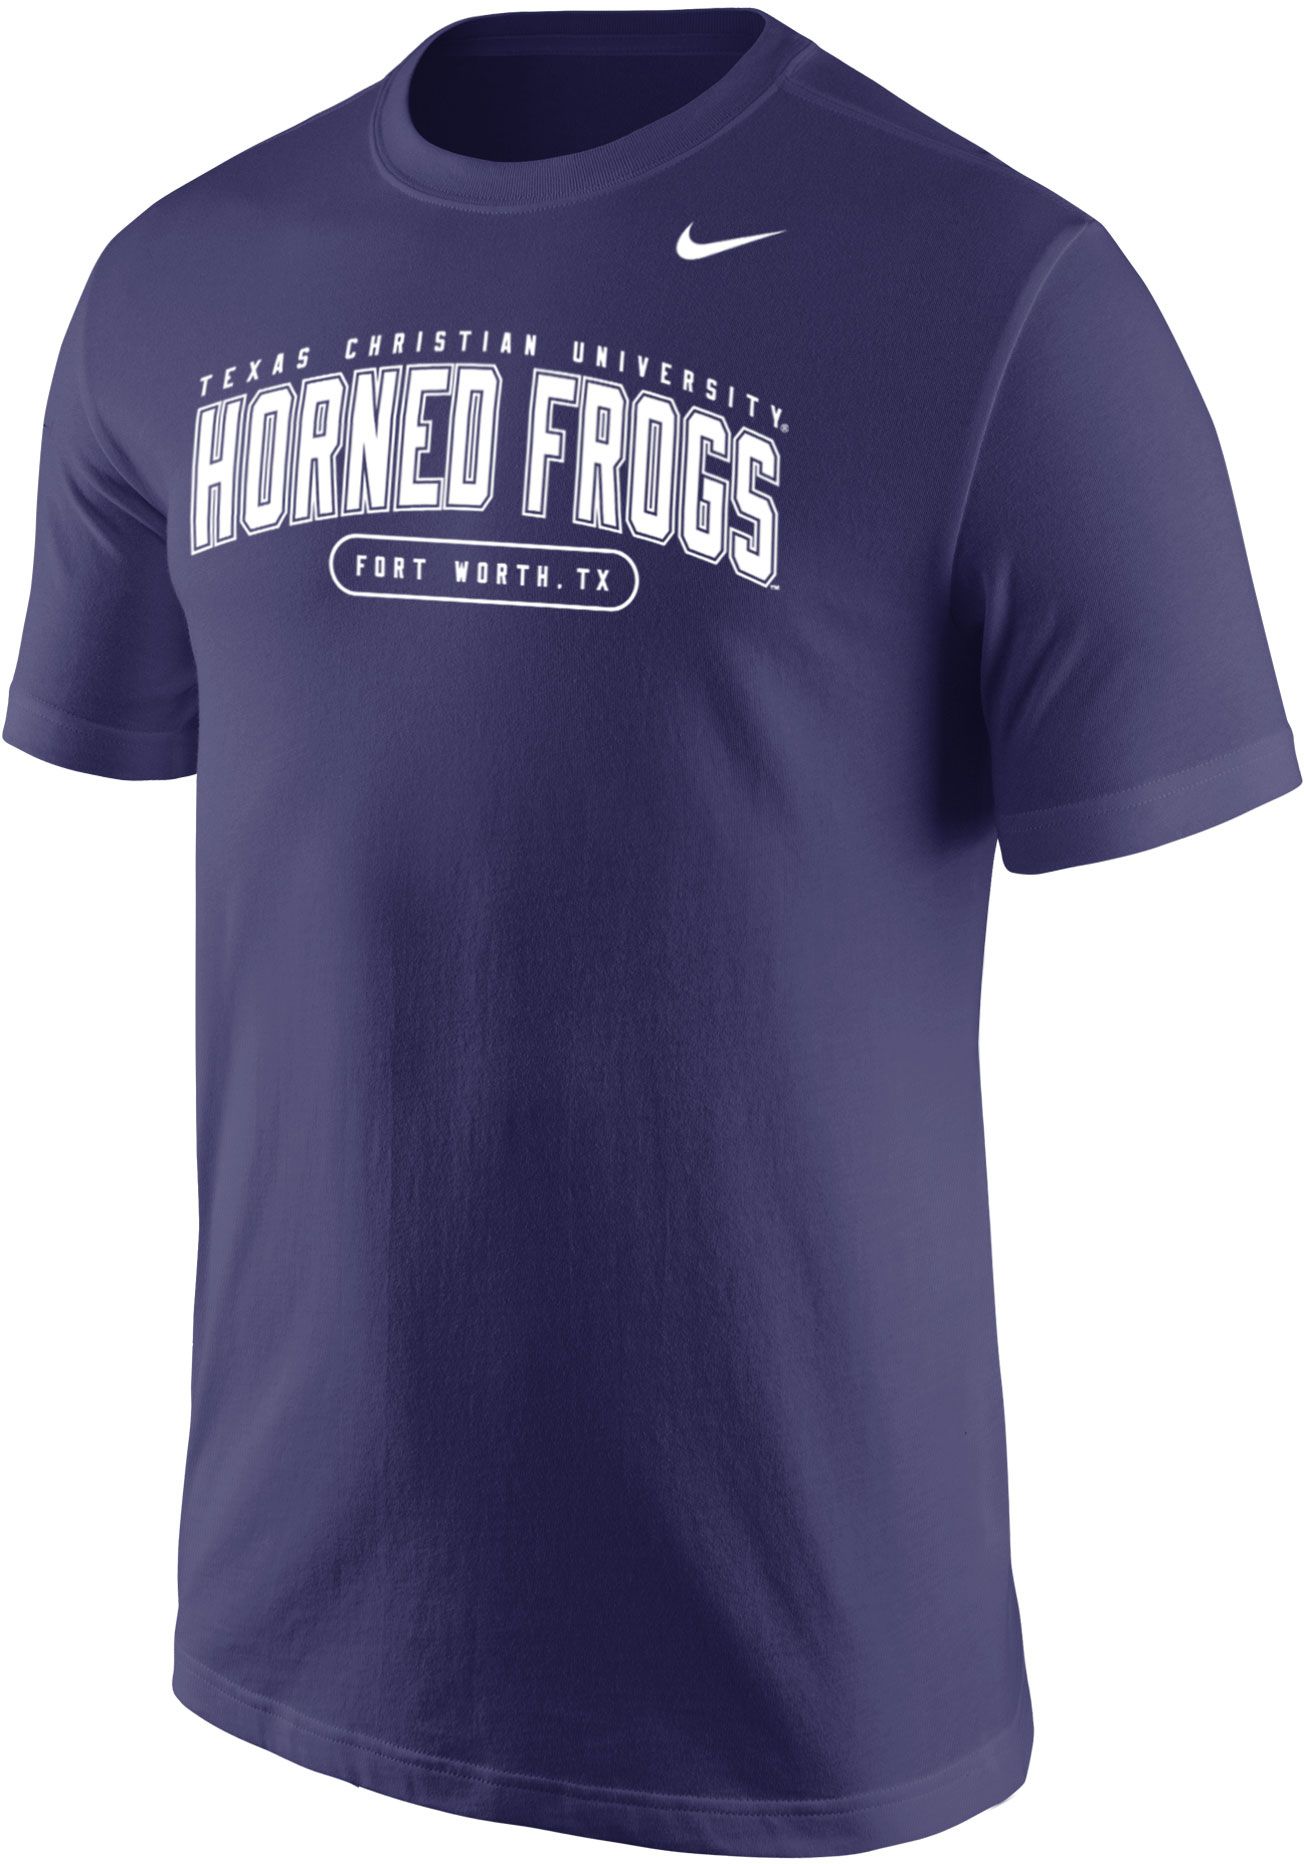 Nike Men's TCU Horned Frogs Purple Core Cotton T-Shirt